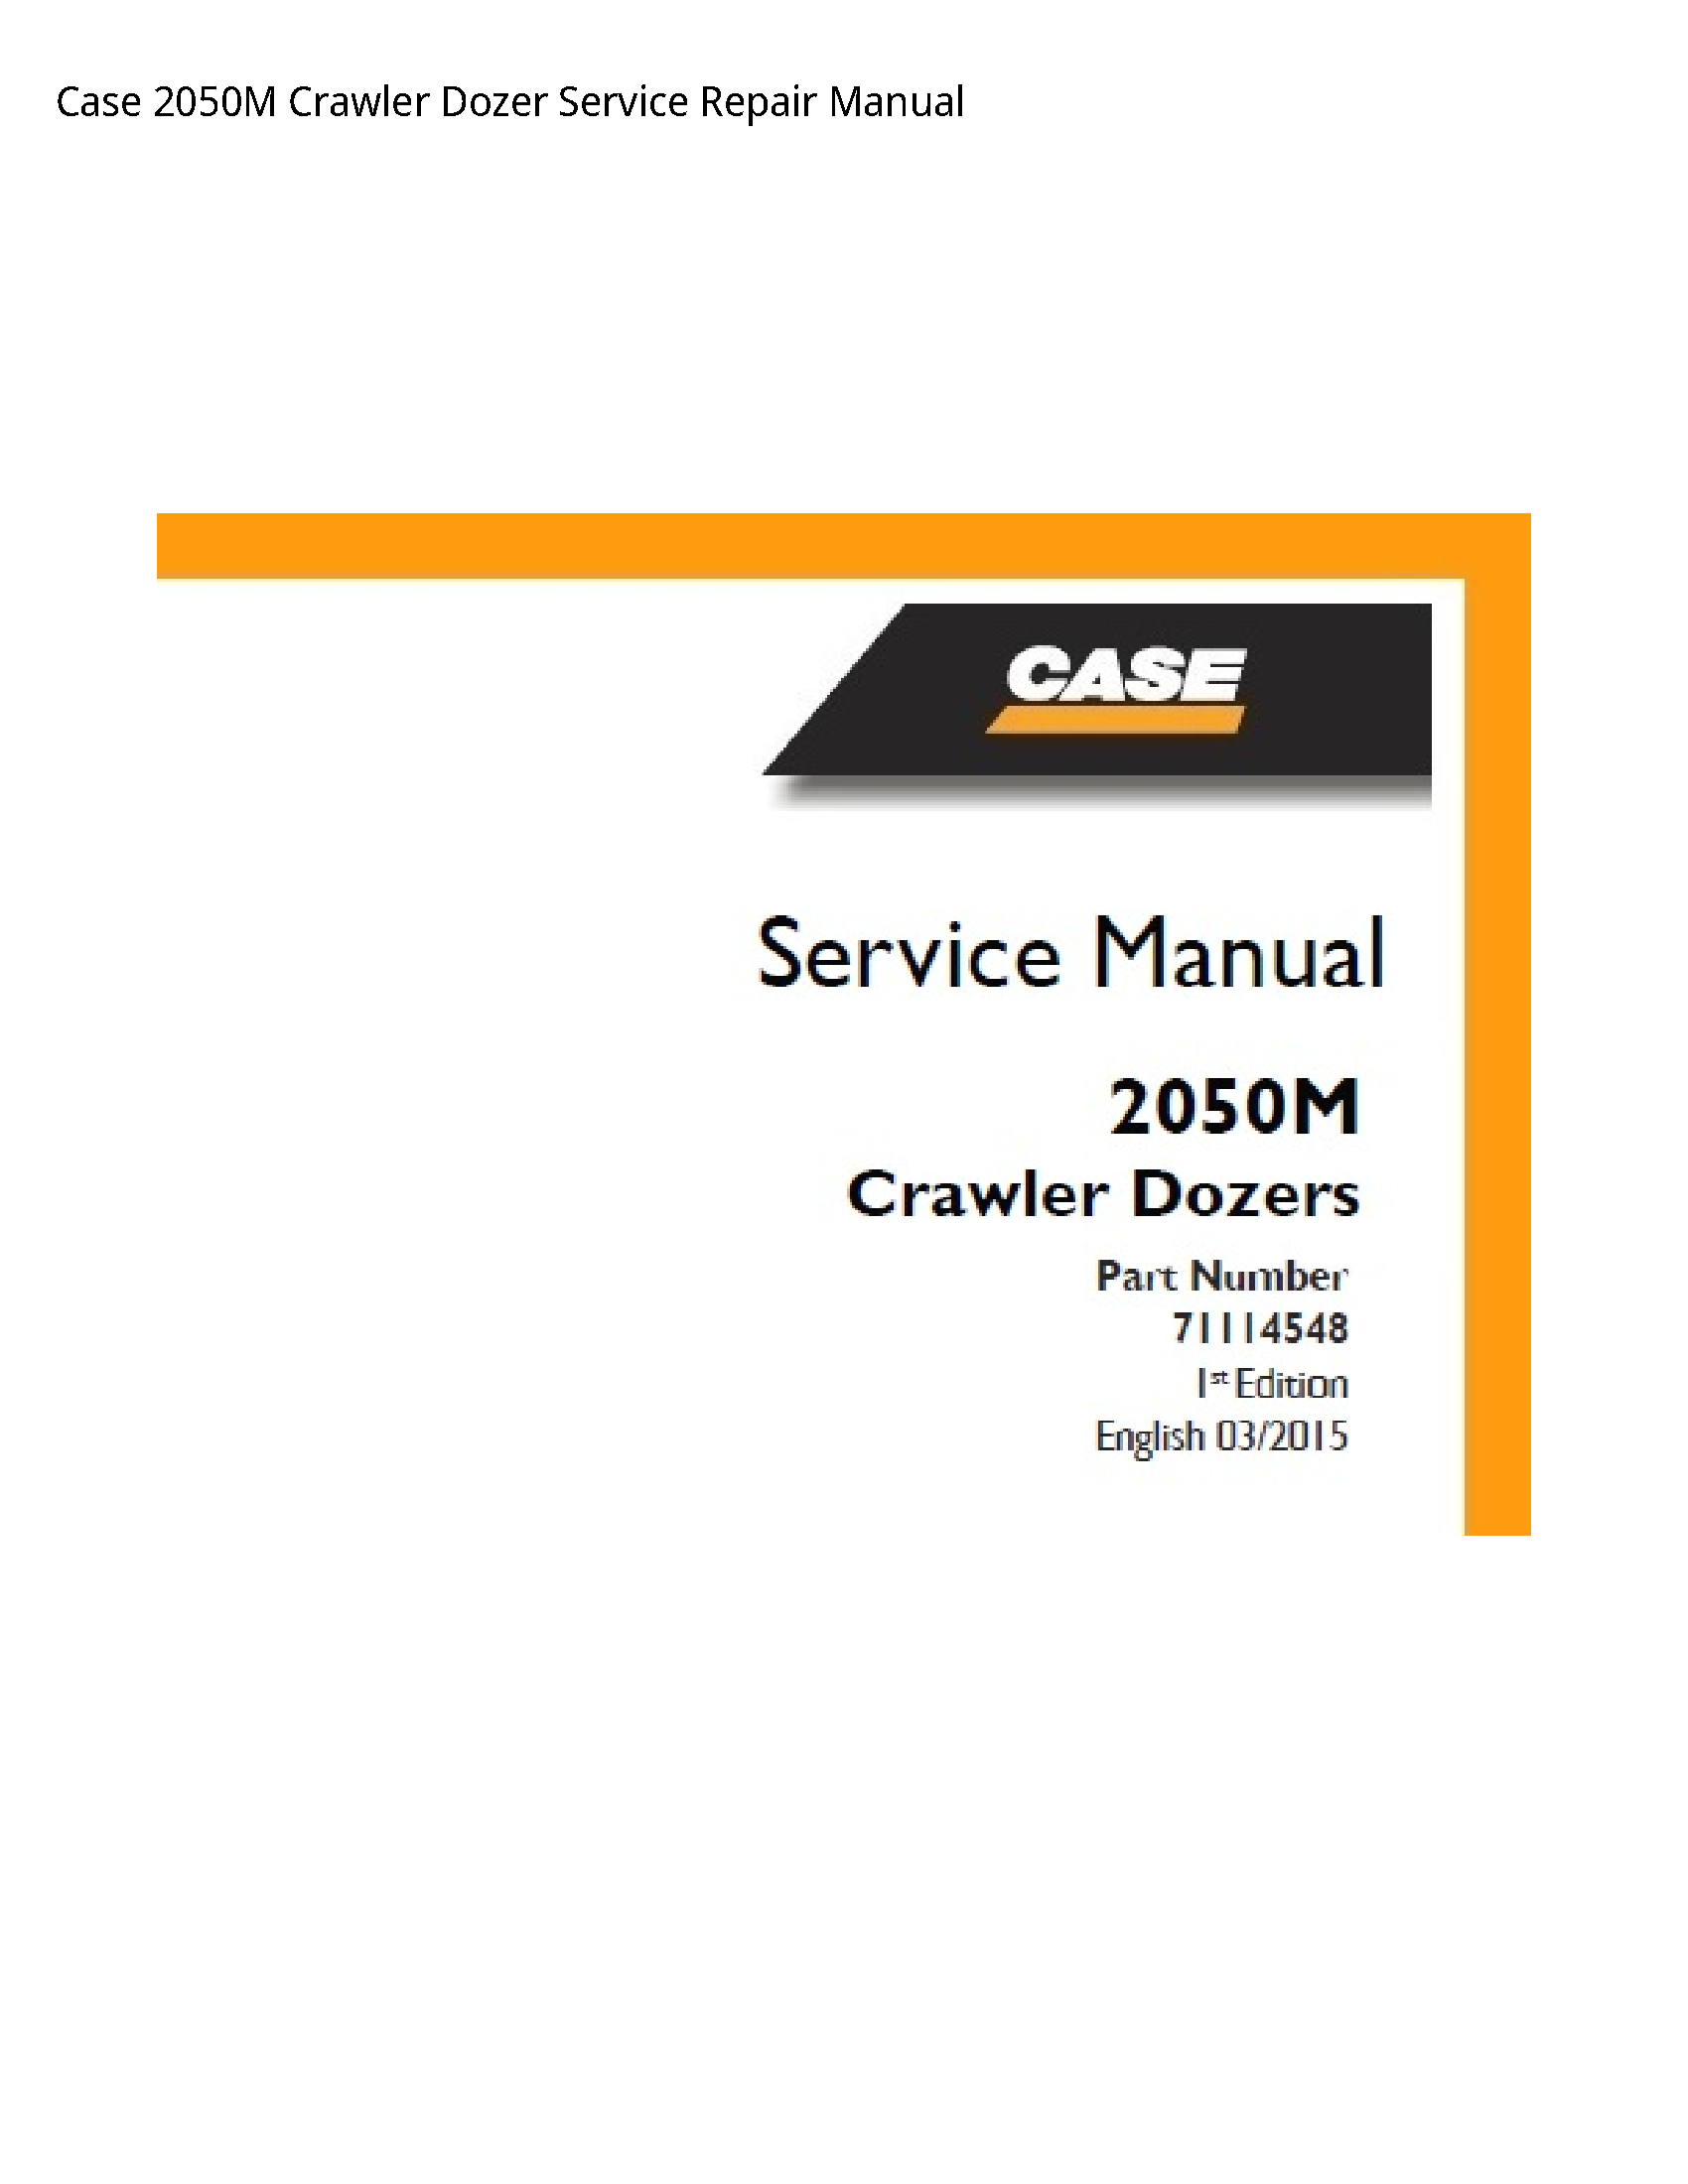 Case/Case IH 2050M Crawler Dozer manual